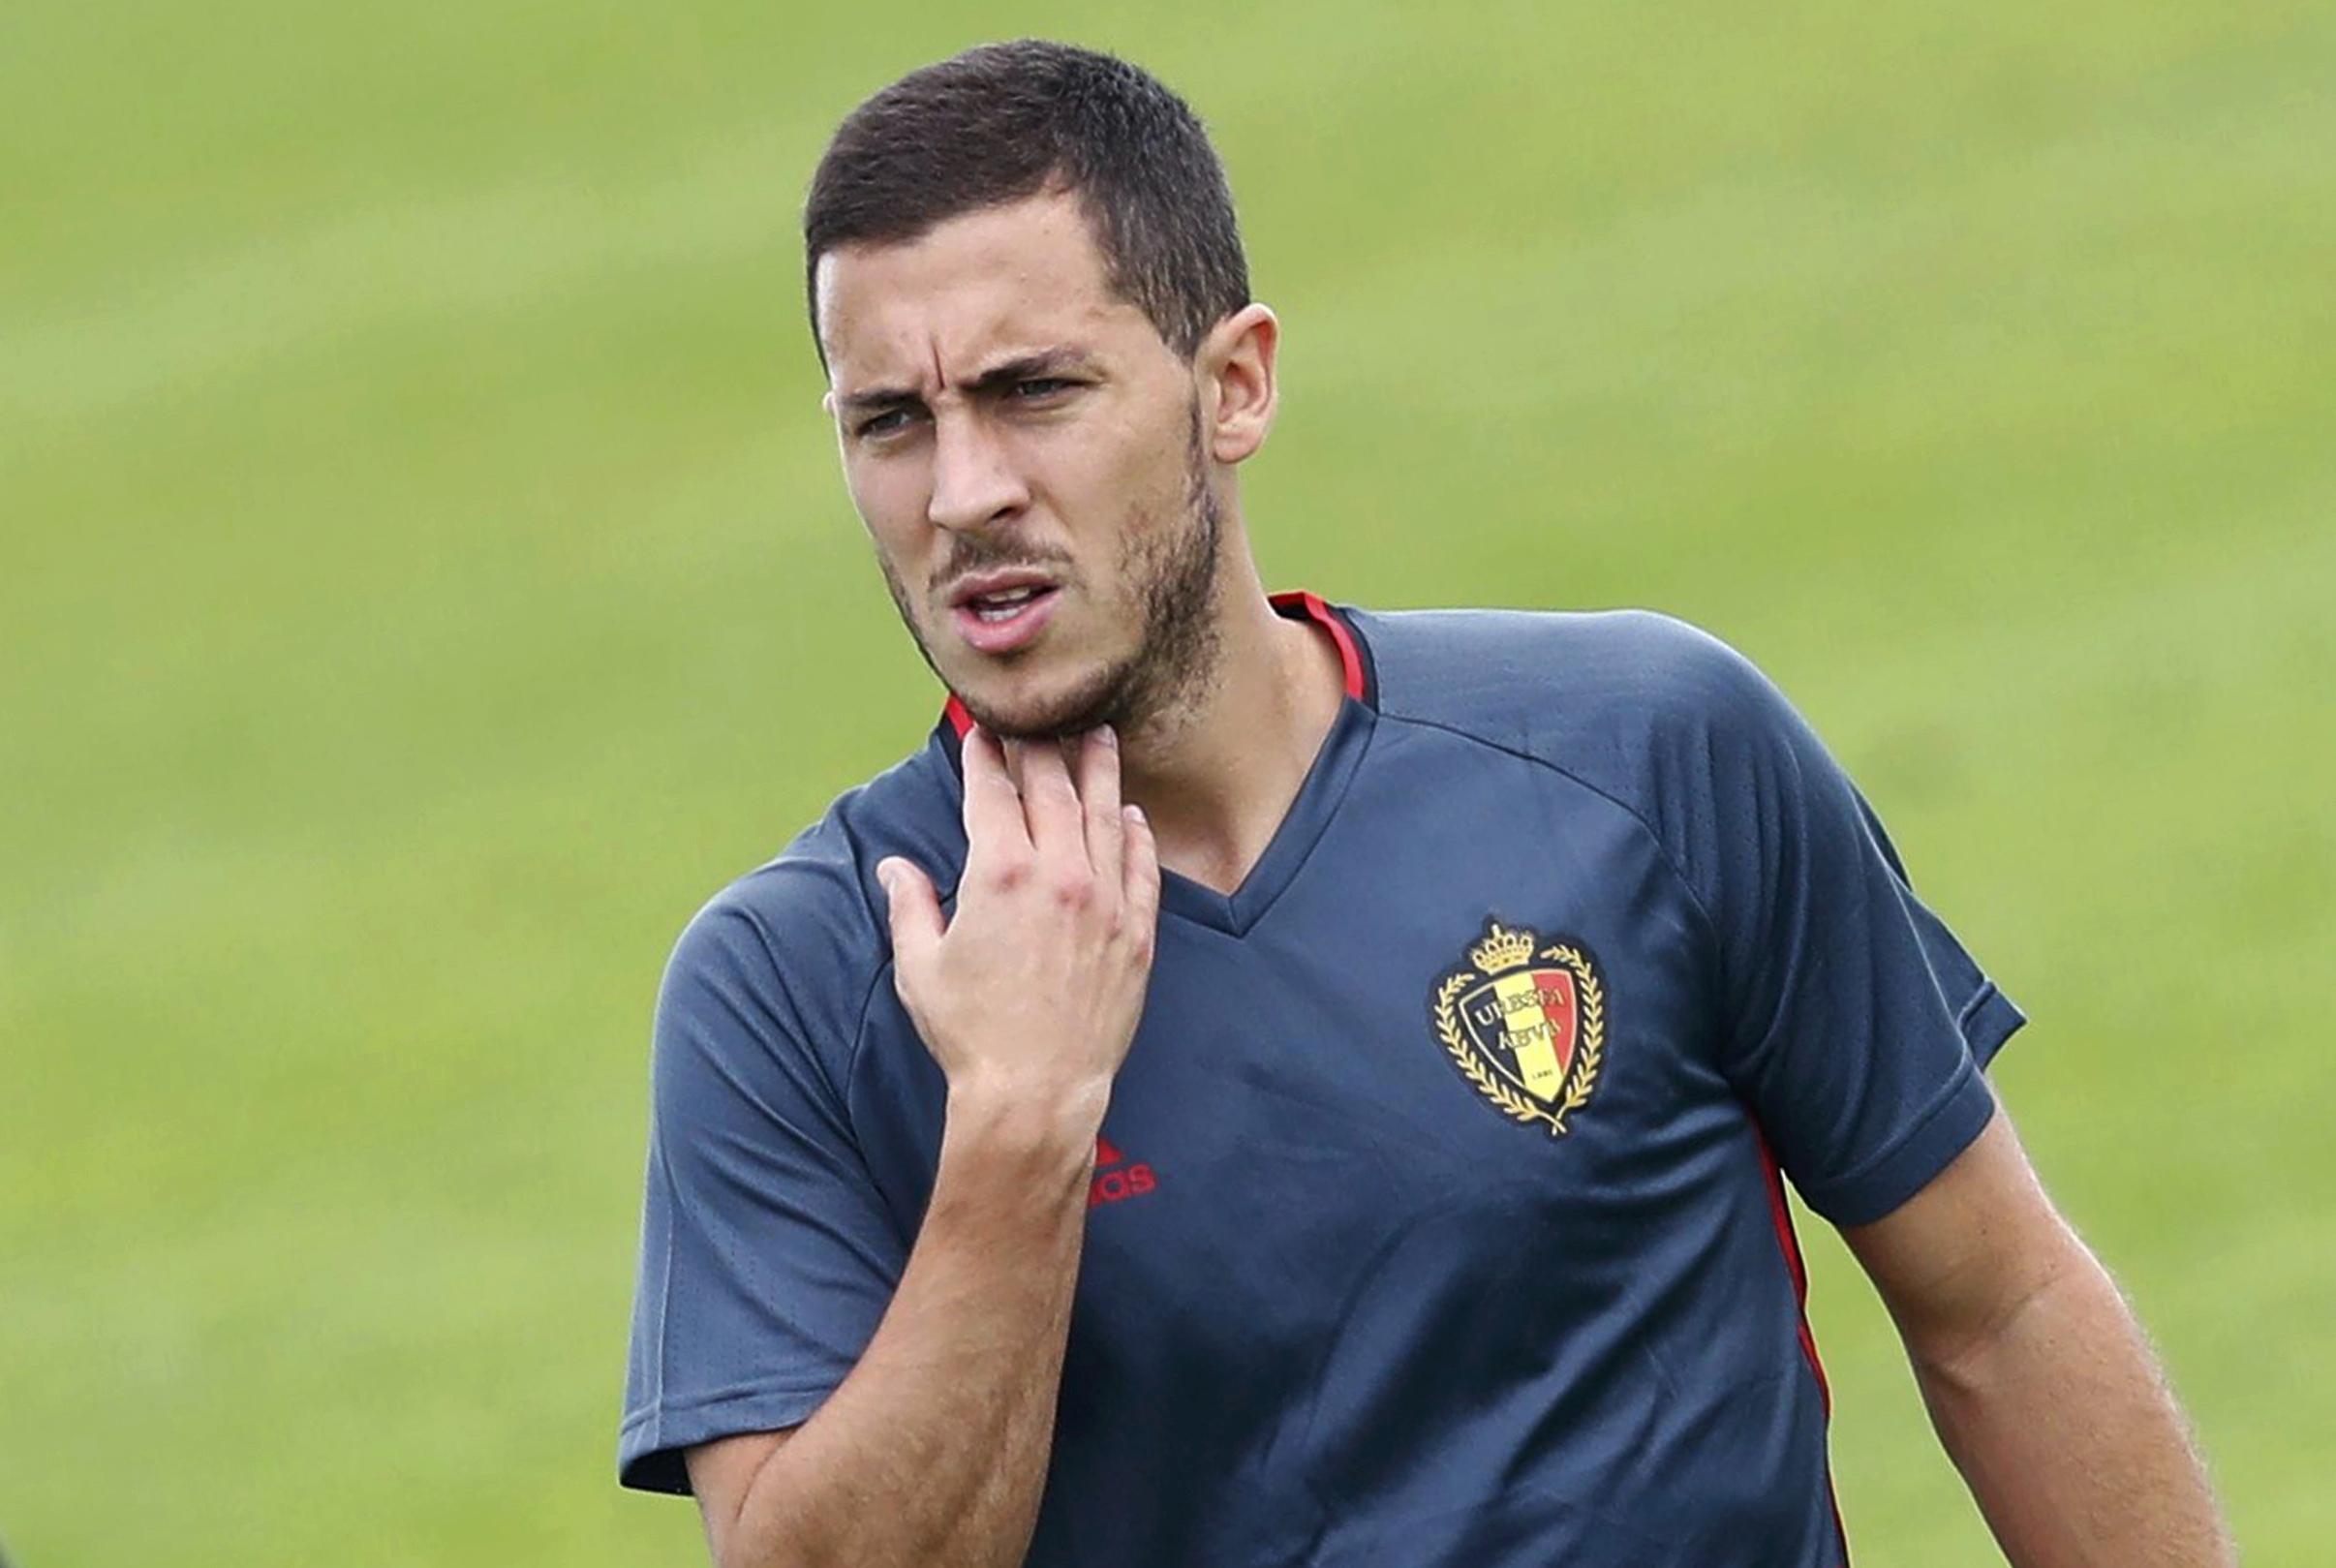 Euro 2016: Belgium's Hazard misses training again before Wales match